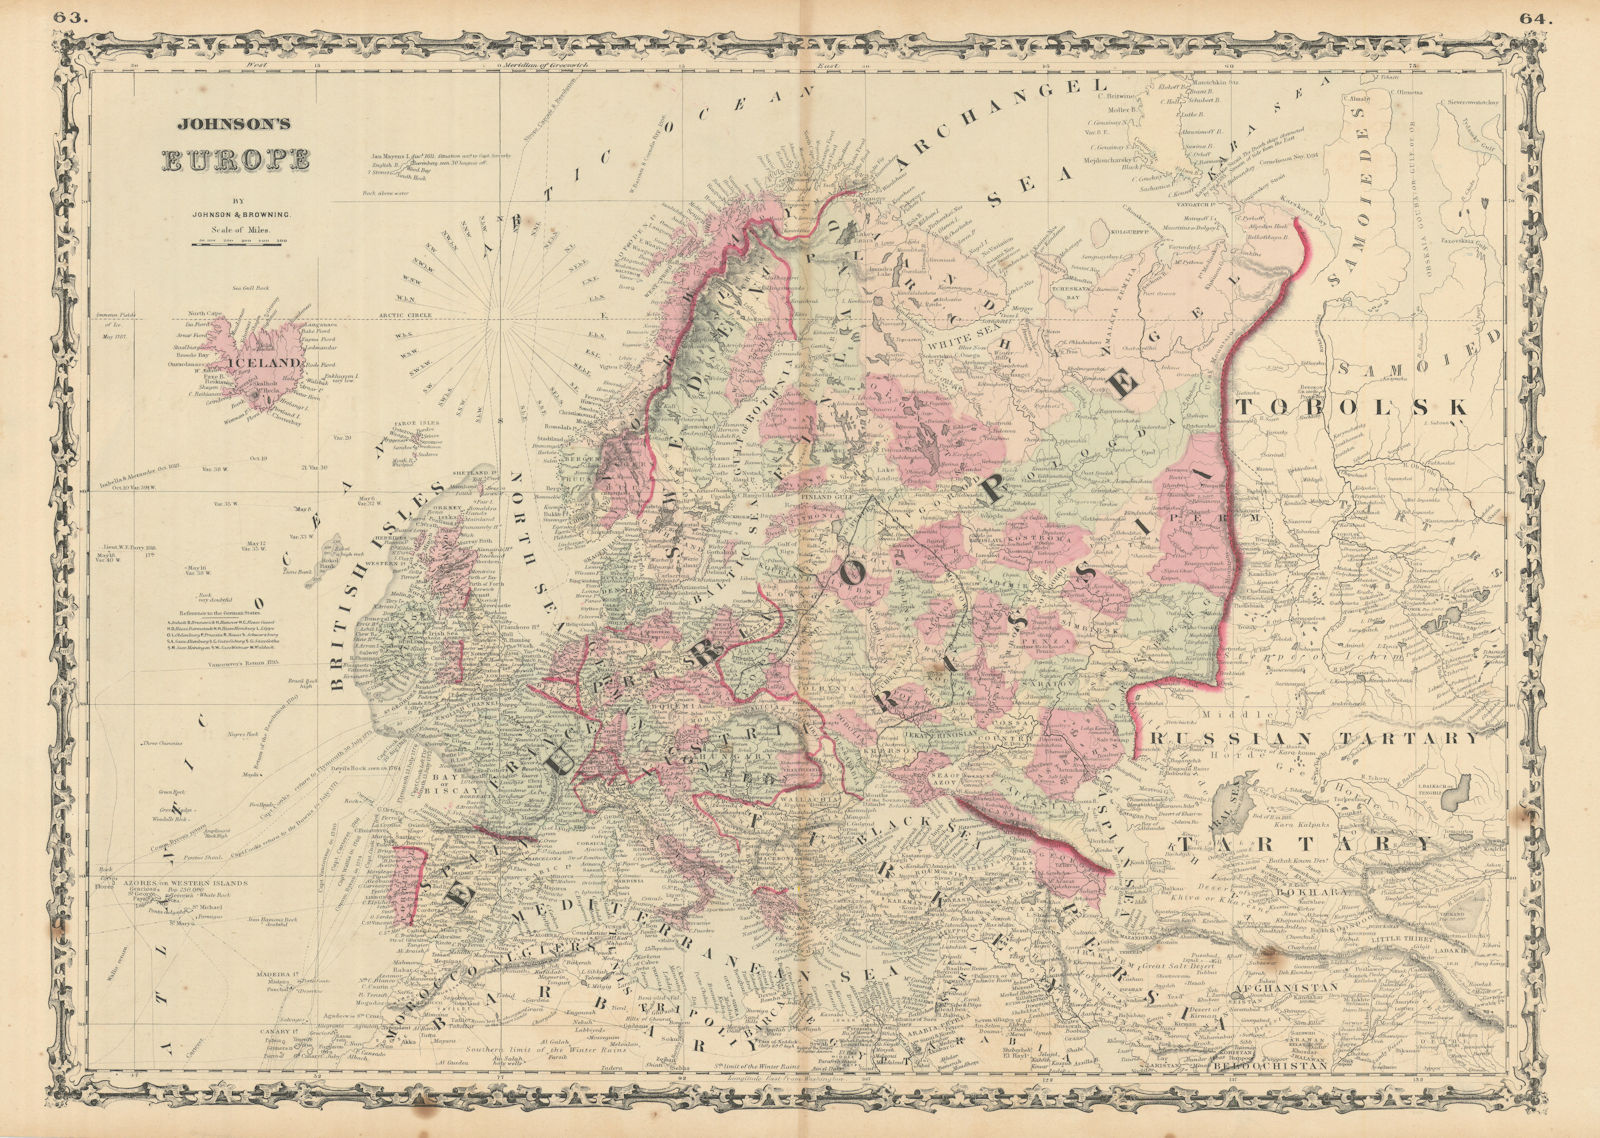 Associate Product Johnson's Europe. Navigators' routes. Continental Shelf 1861 old antique map